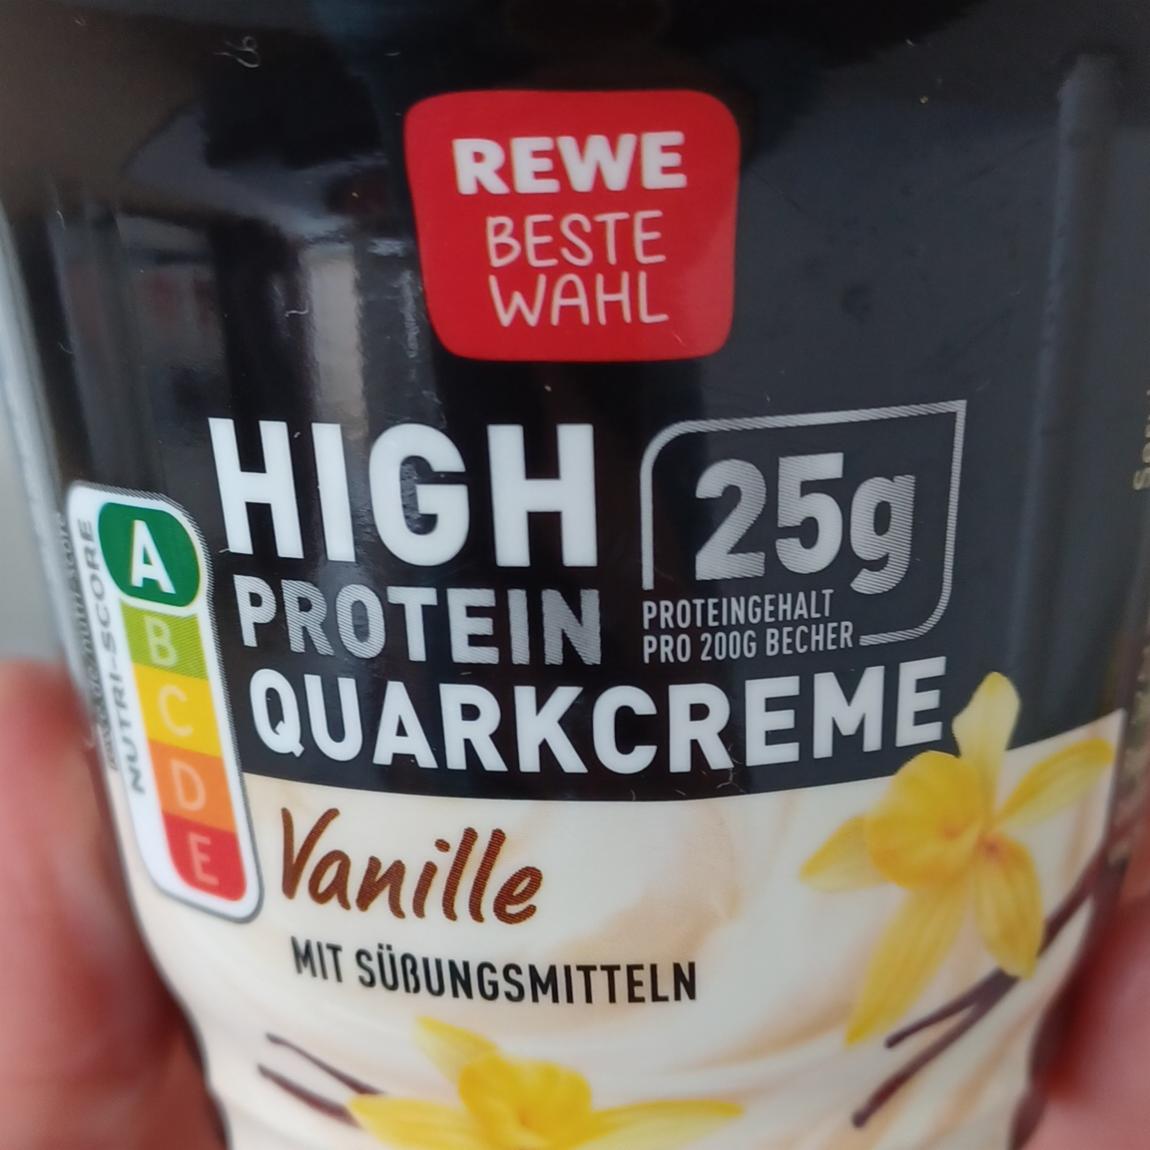 Фото - High Protein Quarkcreme vanille Rewe